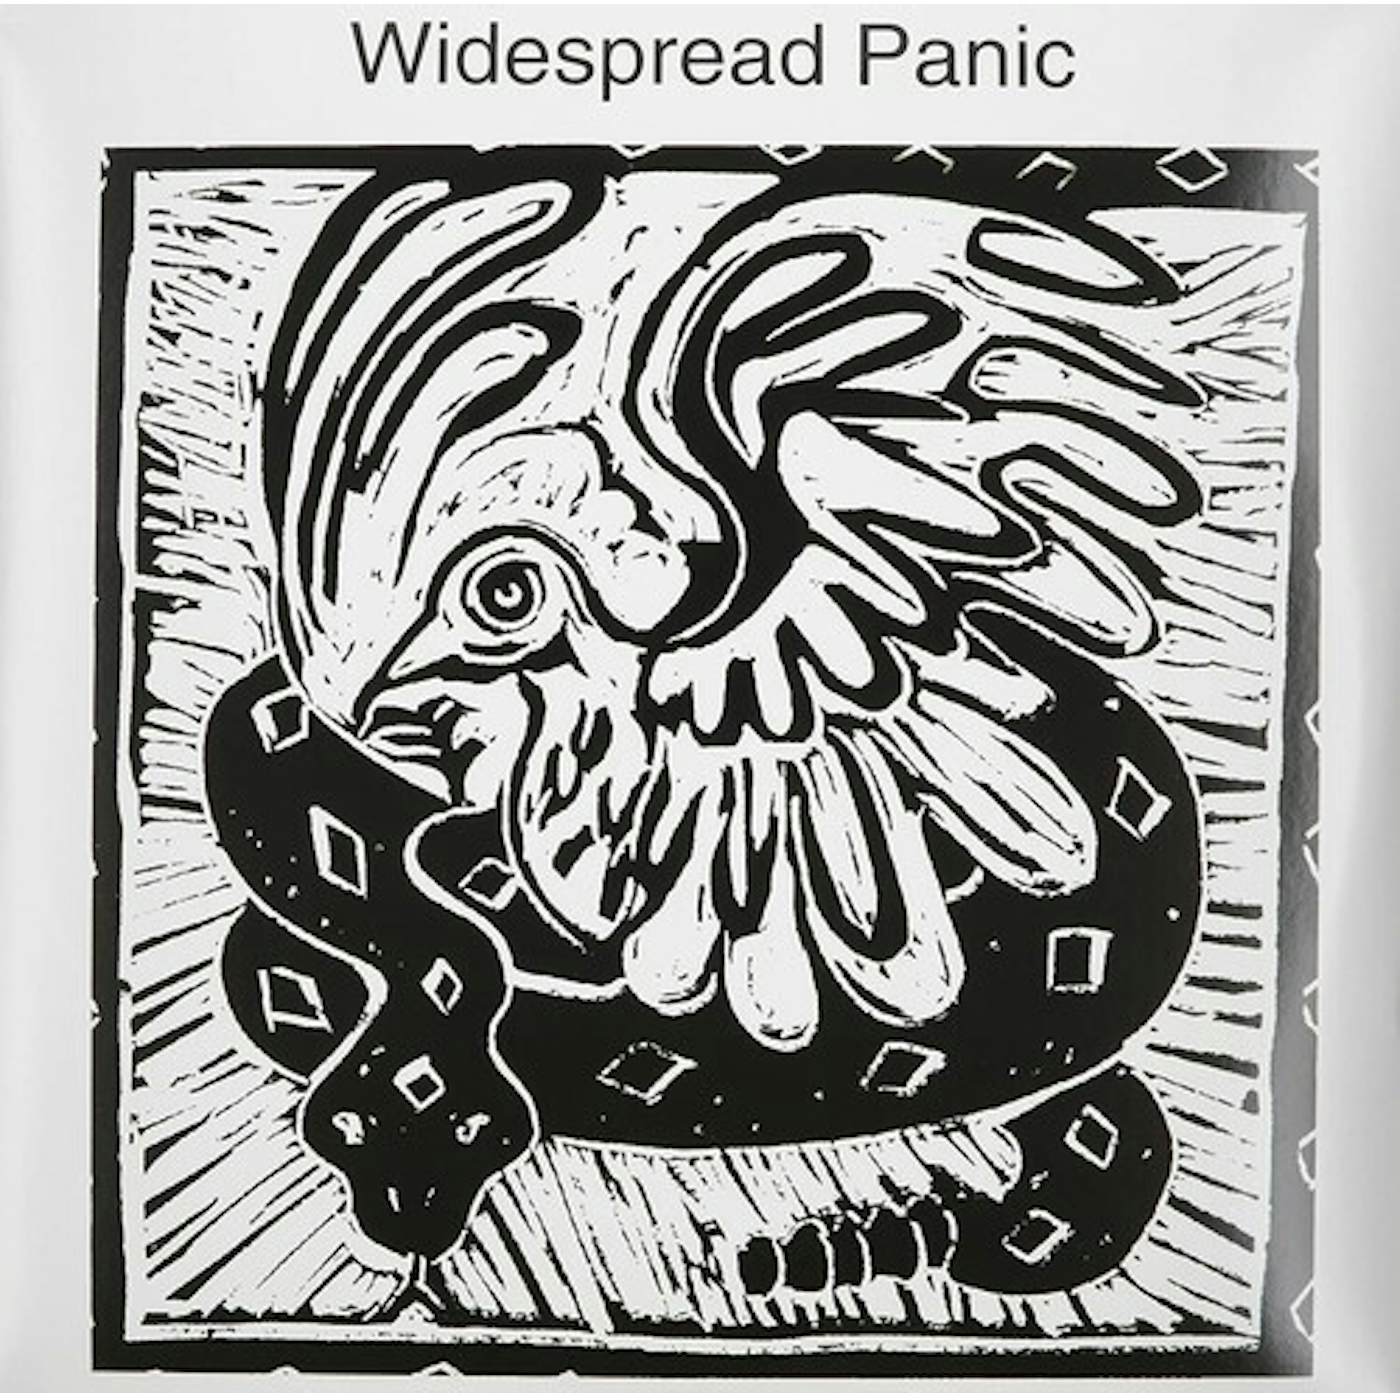 Widespread Panic Vinyl Record